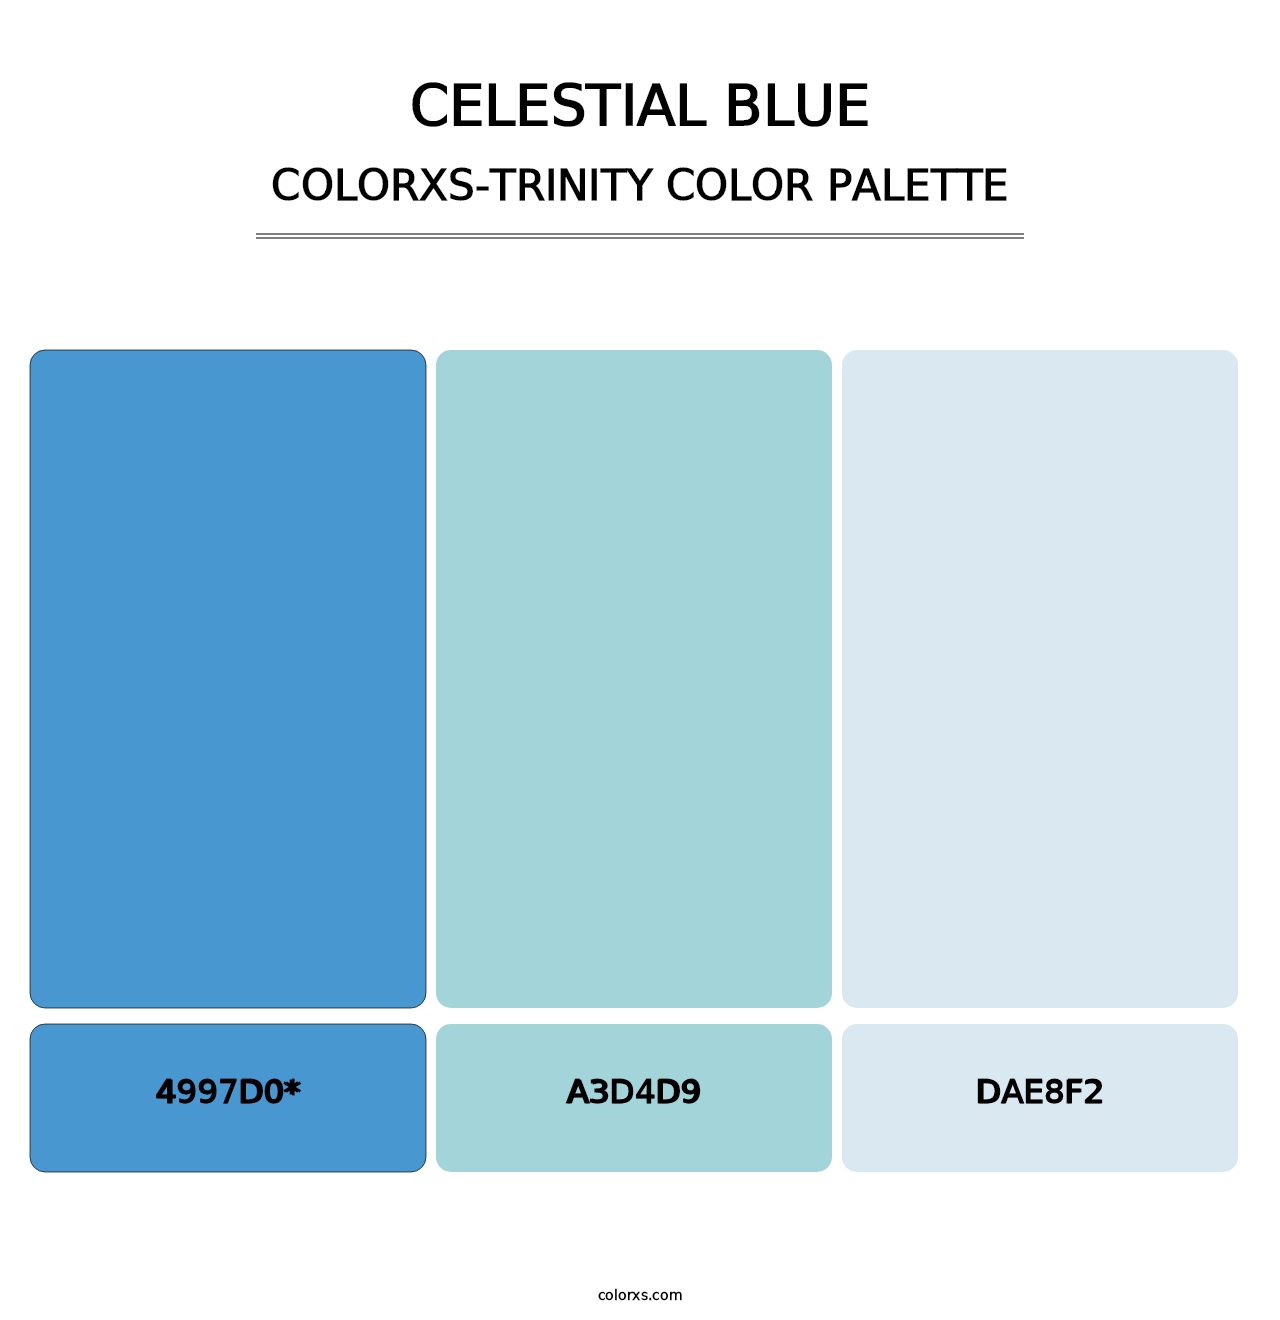 Celestial Blue - Colorxs Trinity Palette